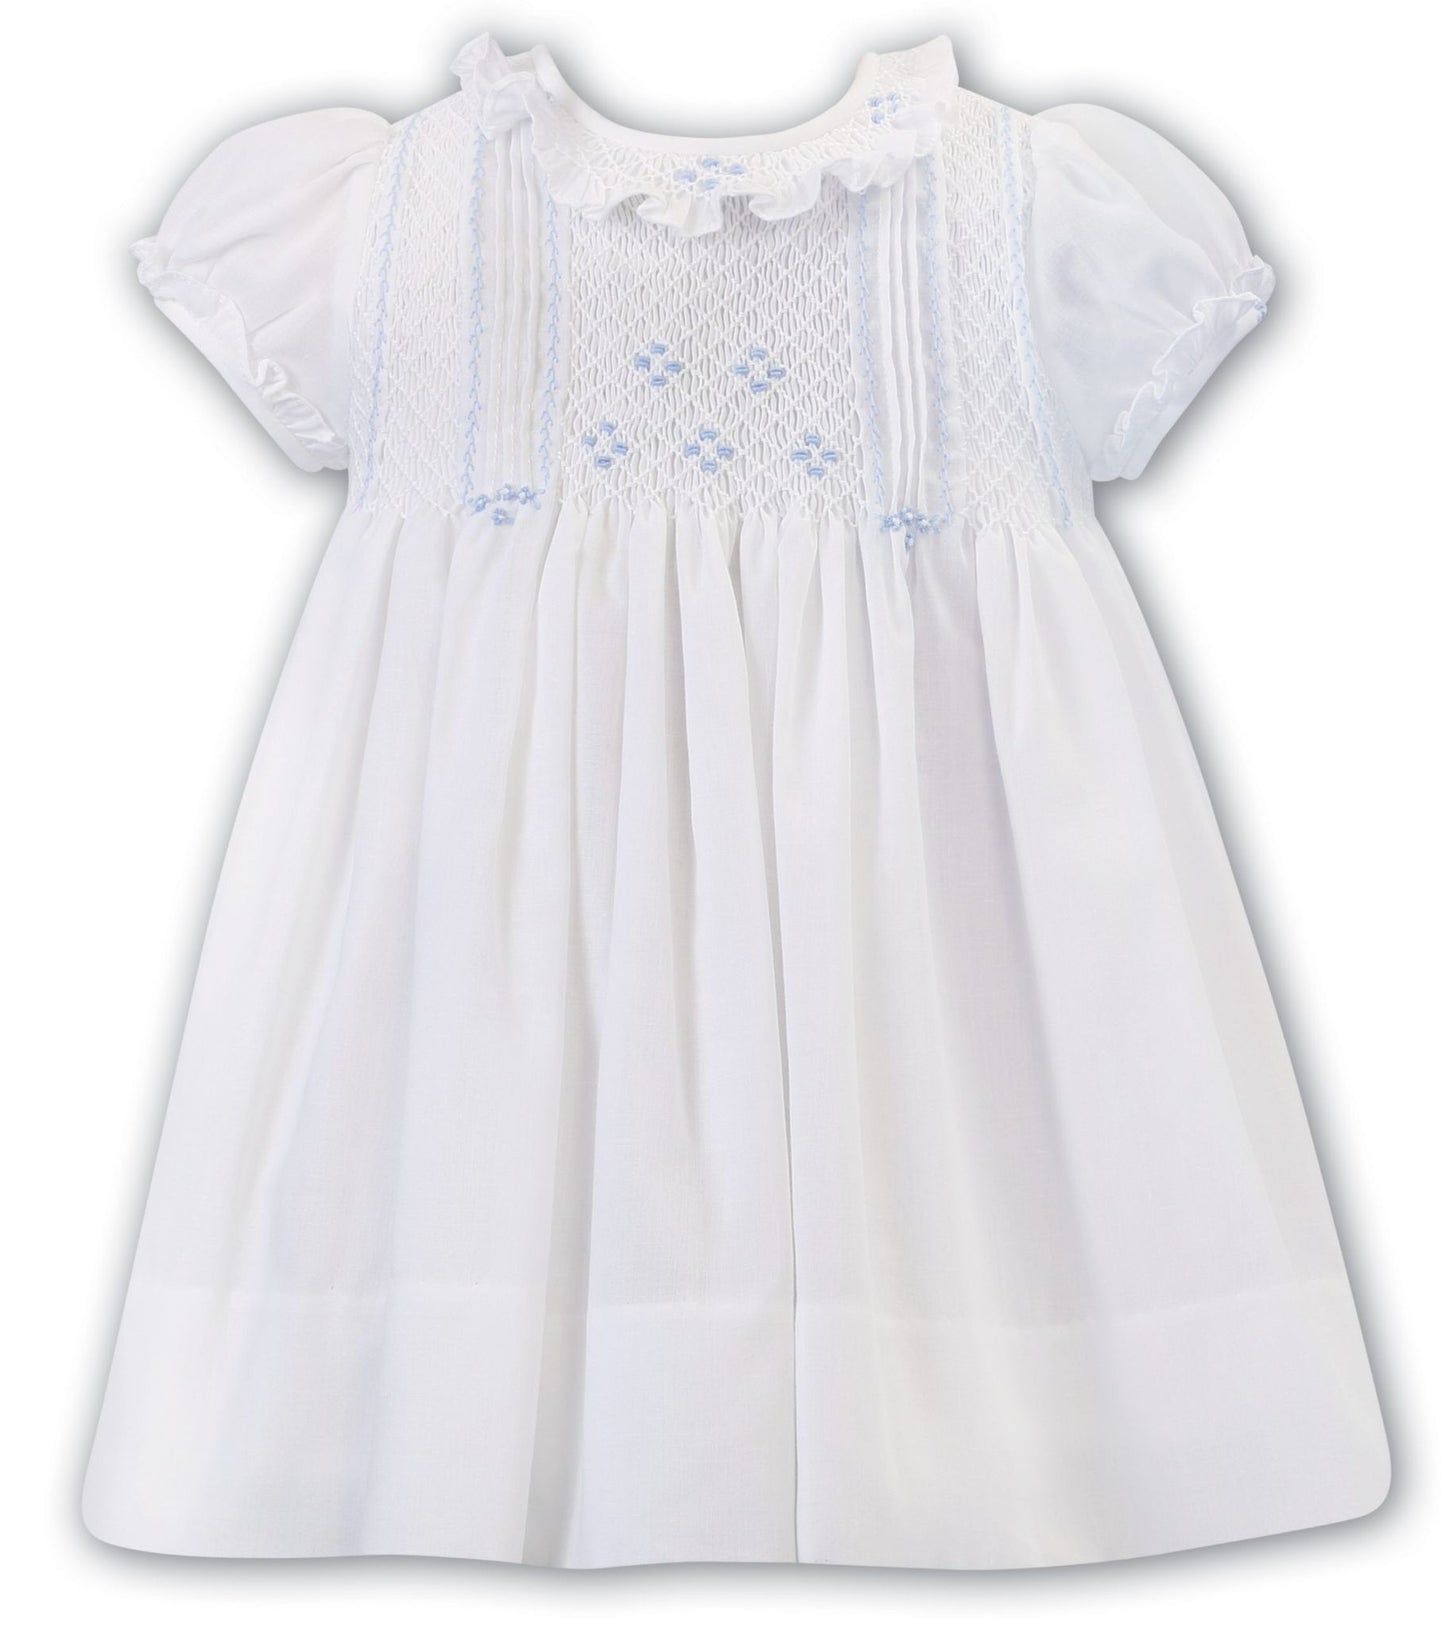 Sarah Louise Baby Girls Ivory & Baby Blue Smocked Short Sleeved Dress